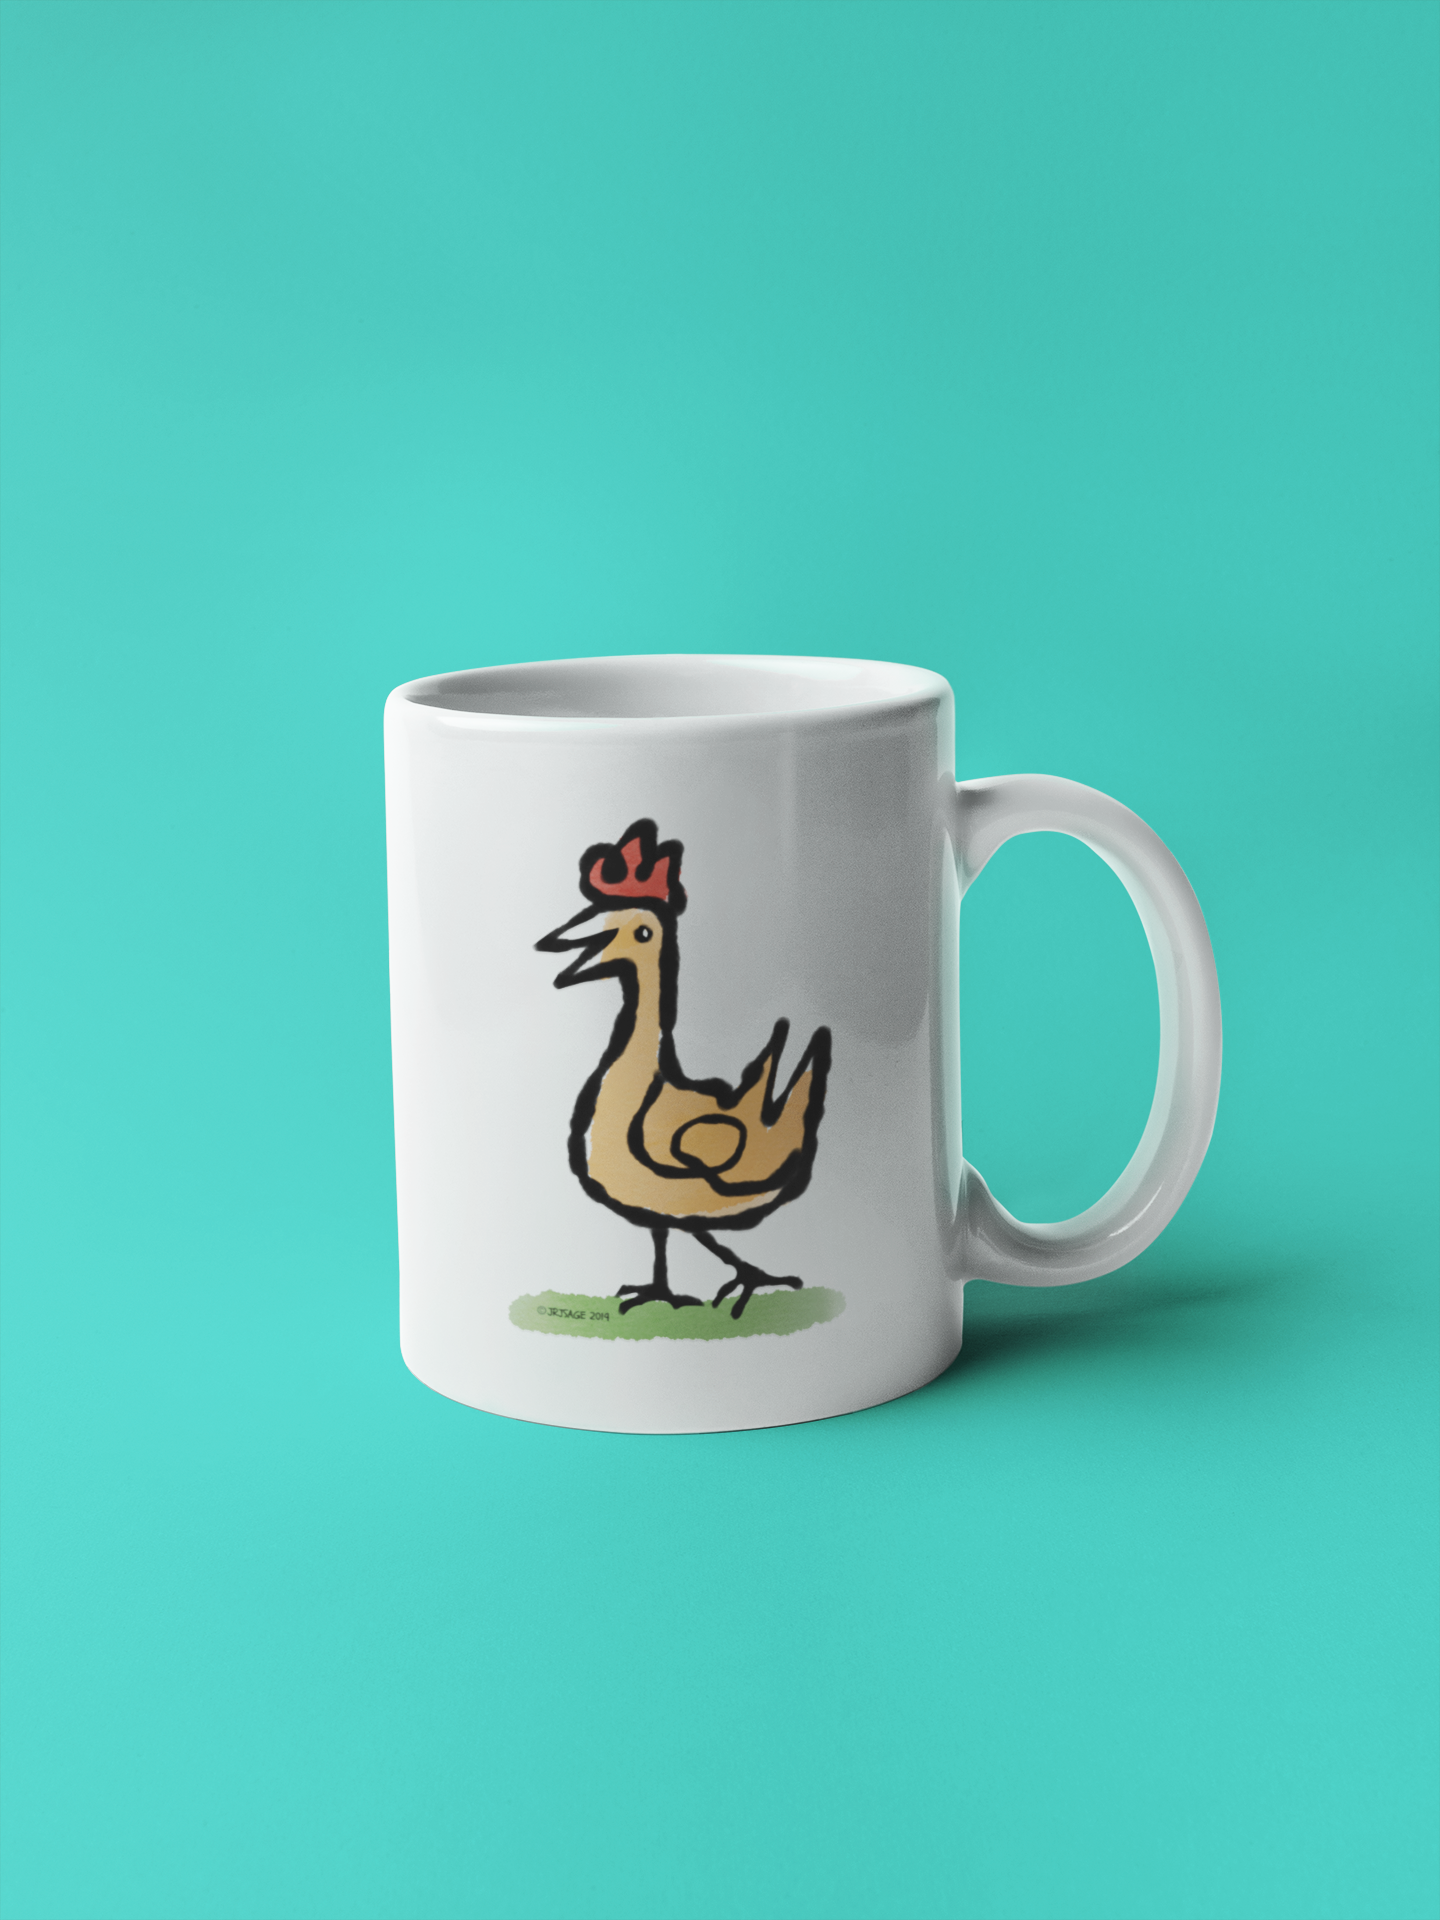 Cute Happy Chicken Coffee Mug illustrated design on a quality ceramic mug by Hector and Bone